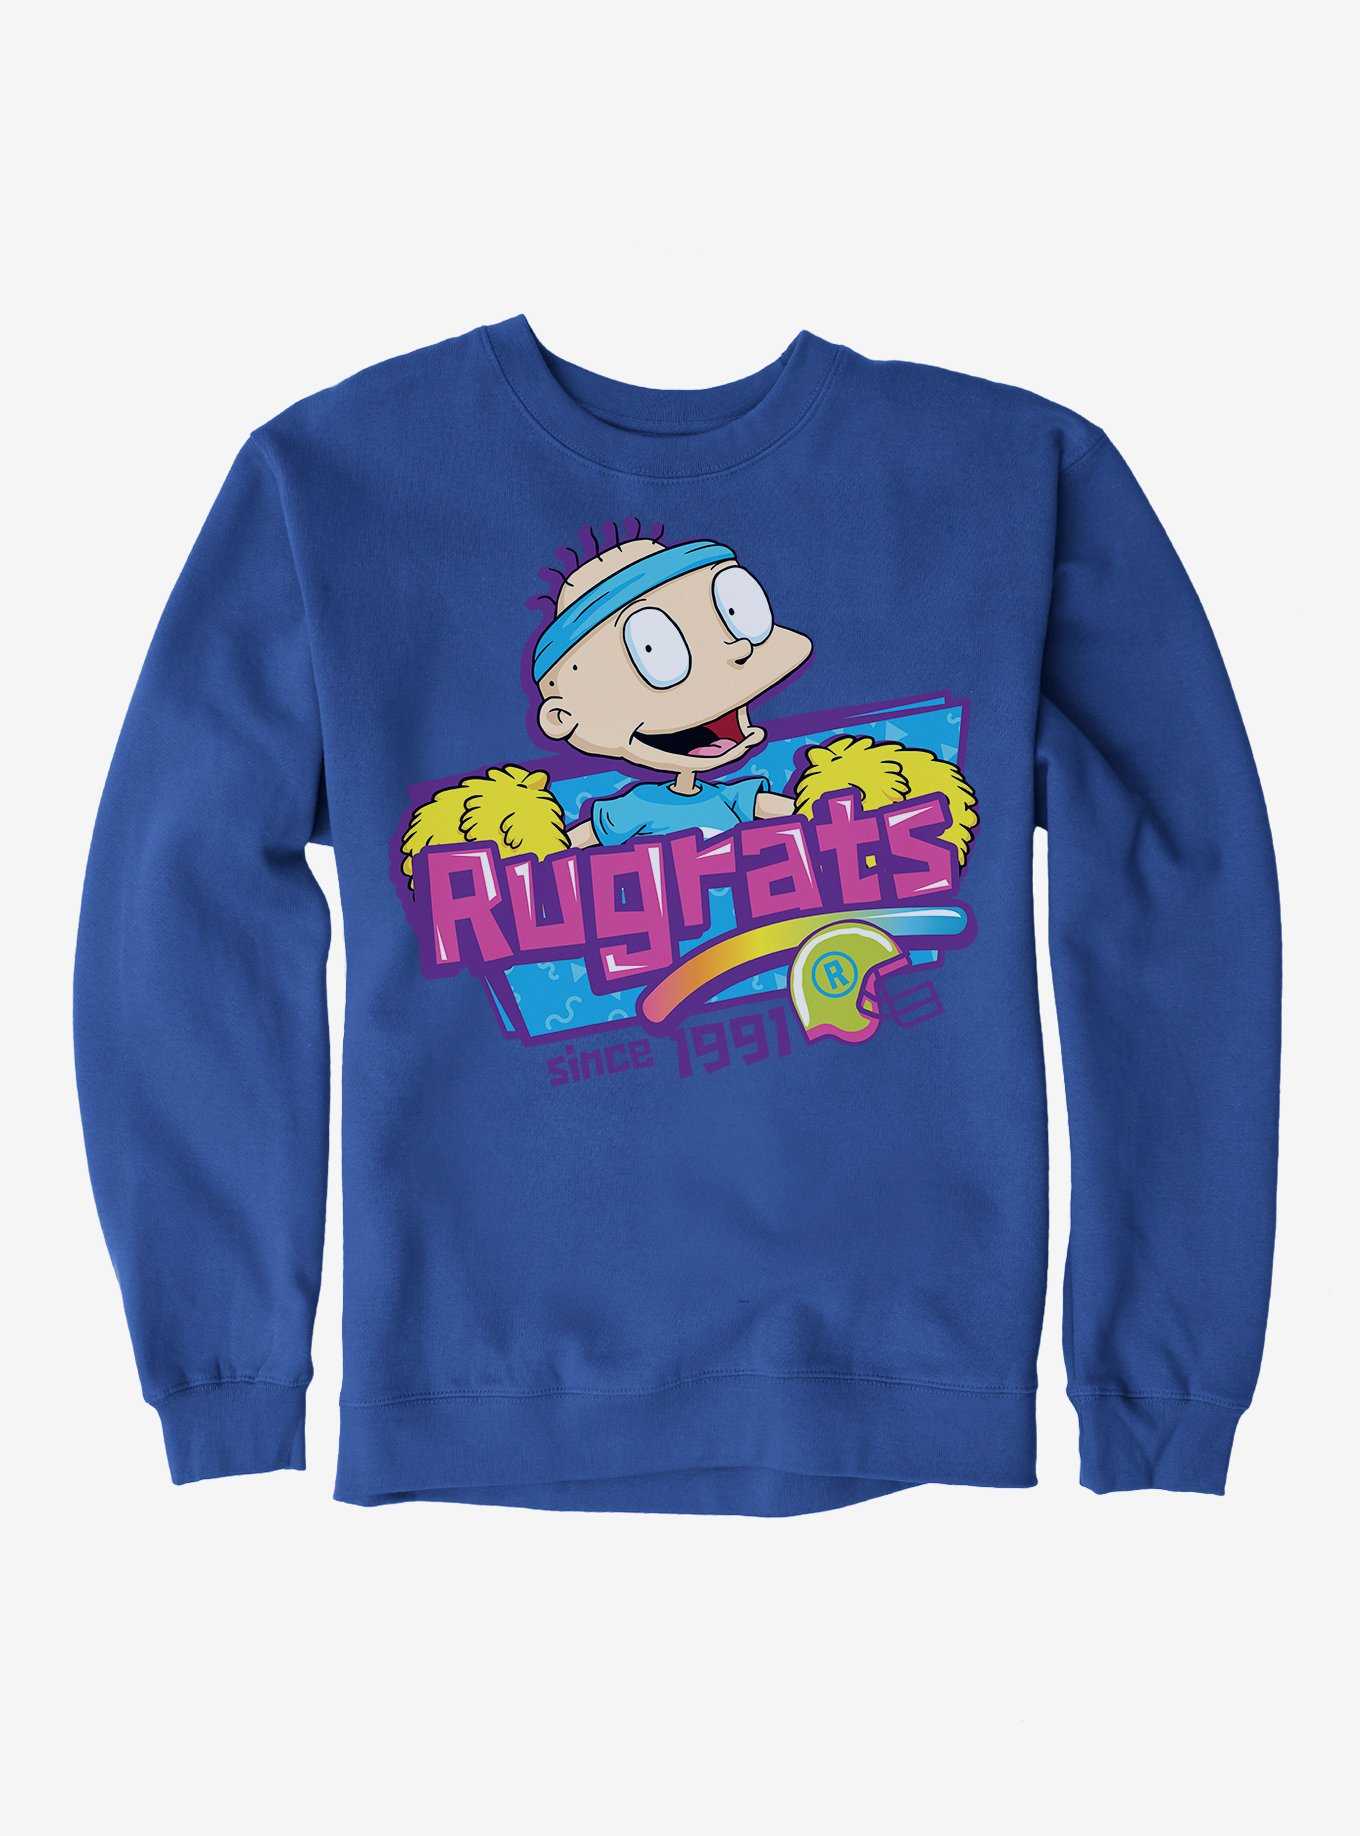 Rugrats Tommy Since 1991 Sweatshirt, ROYAL, hi-res